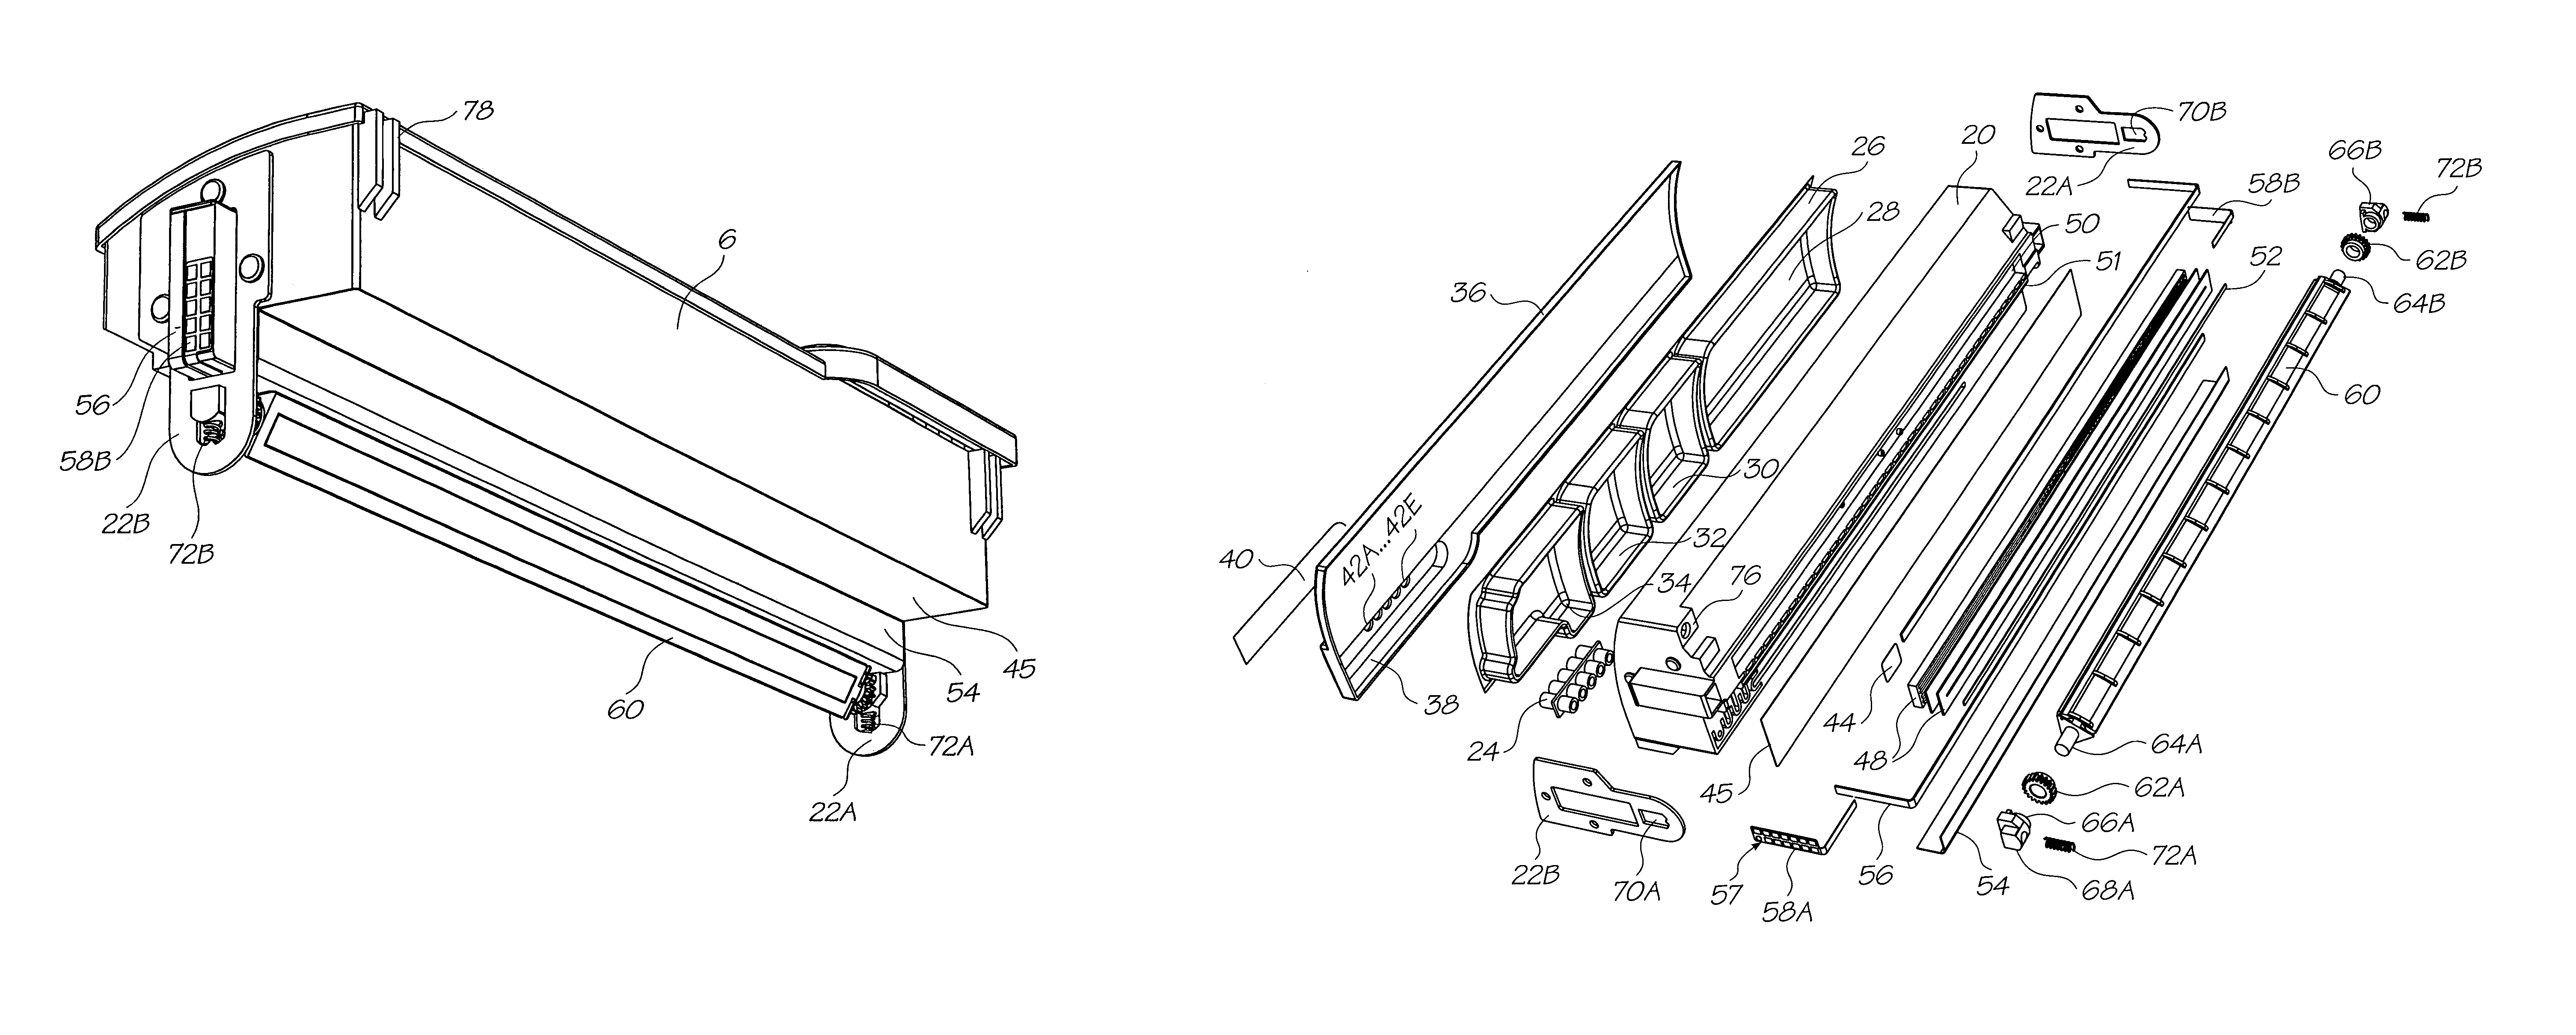 Inkjet printer cartridge with uniform compressed air distribution